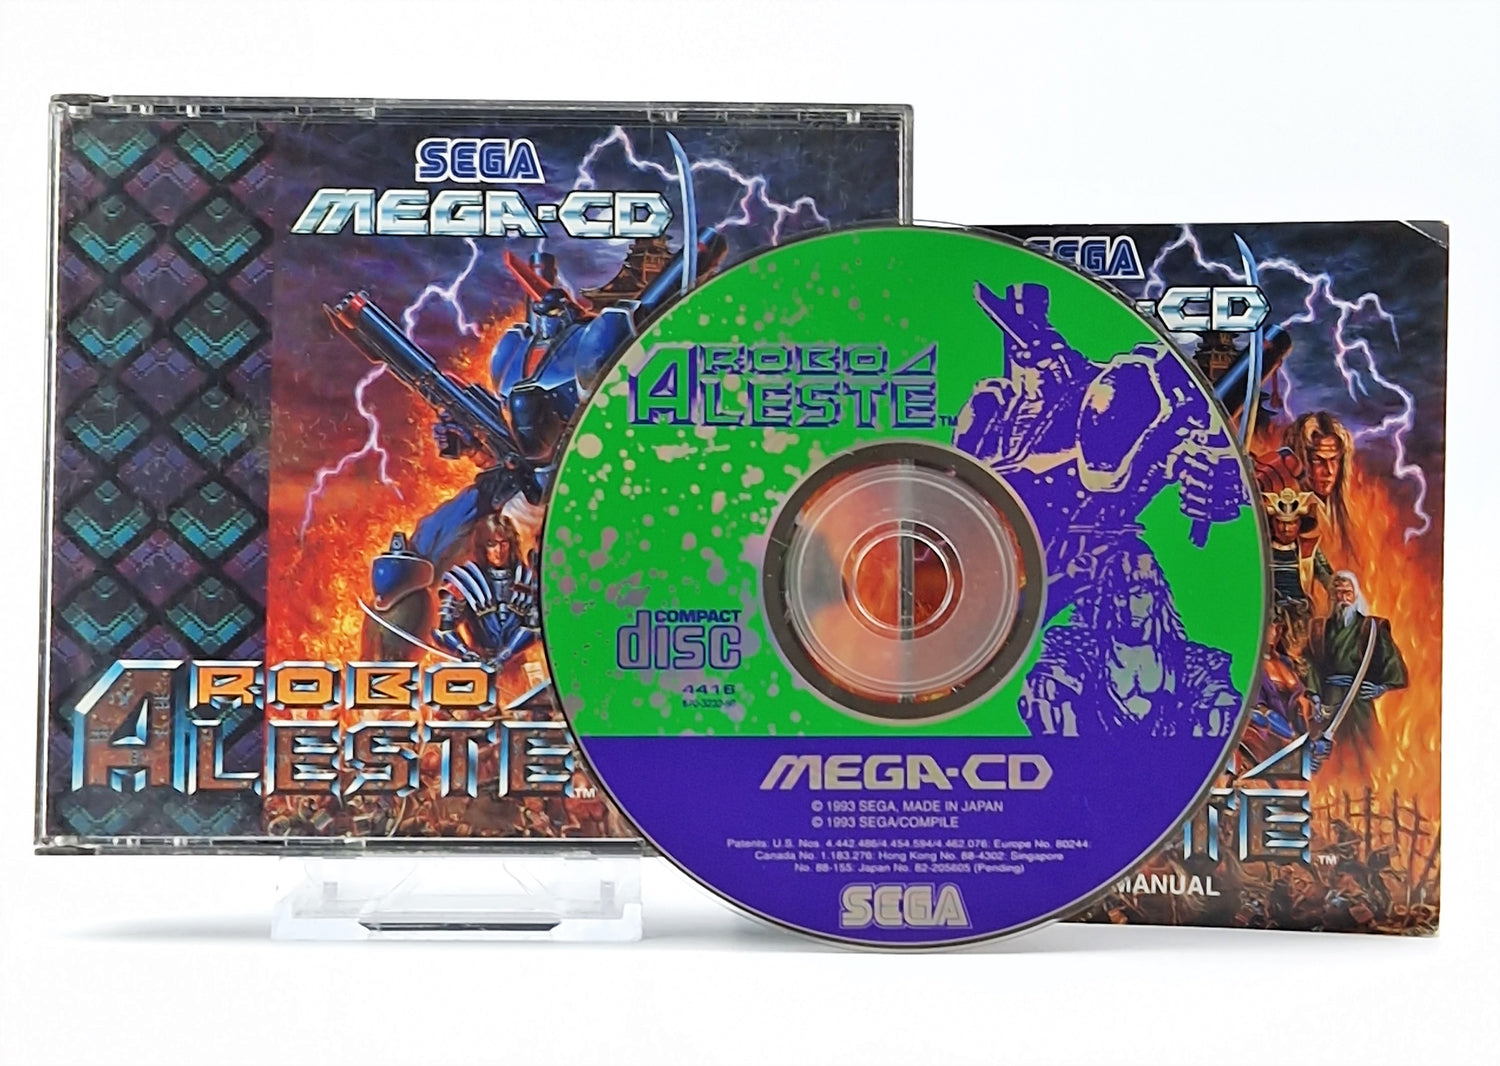 Sega Mega CD Spiel : Robo Aleste - CD Anleitung OVP cib / MCD PAL